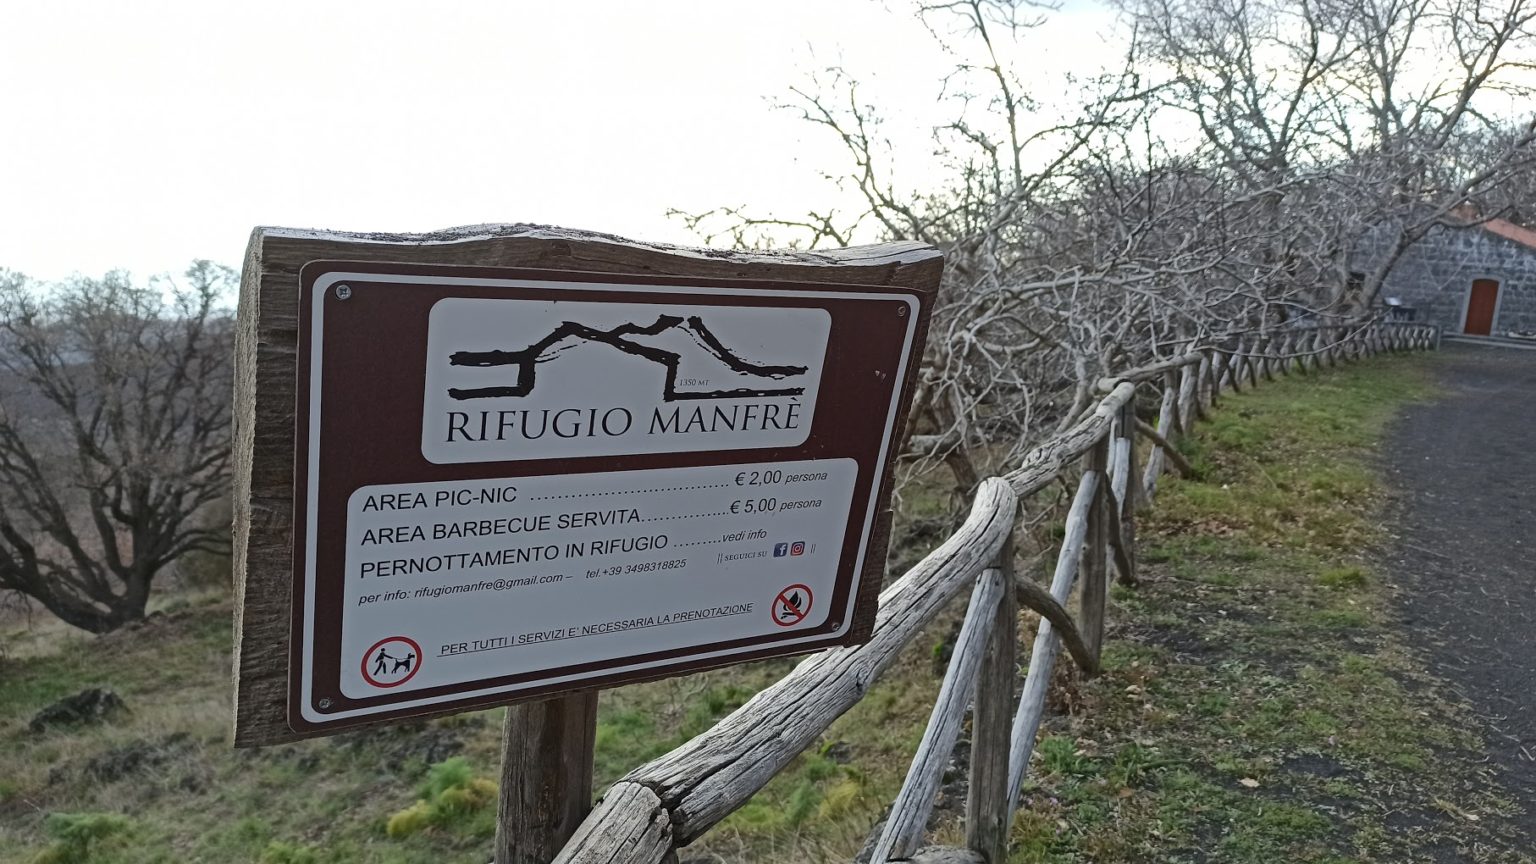 Rifugio Manfre Etna